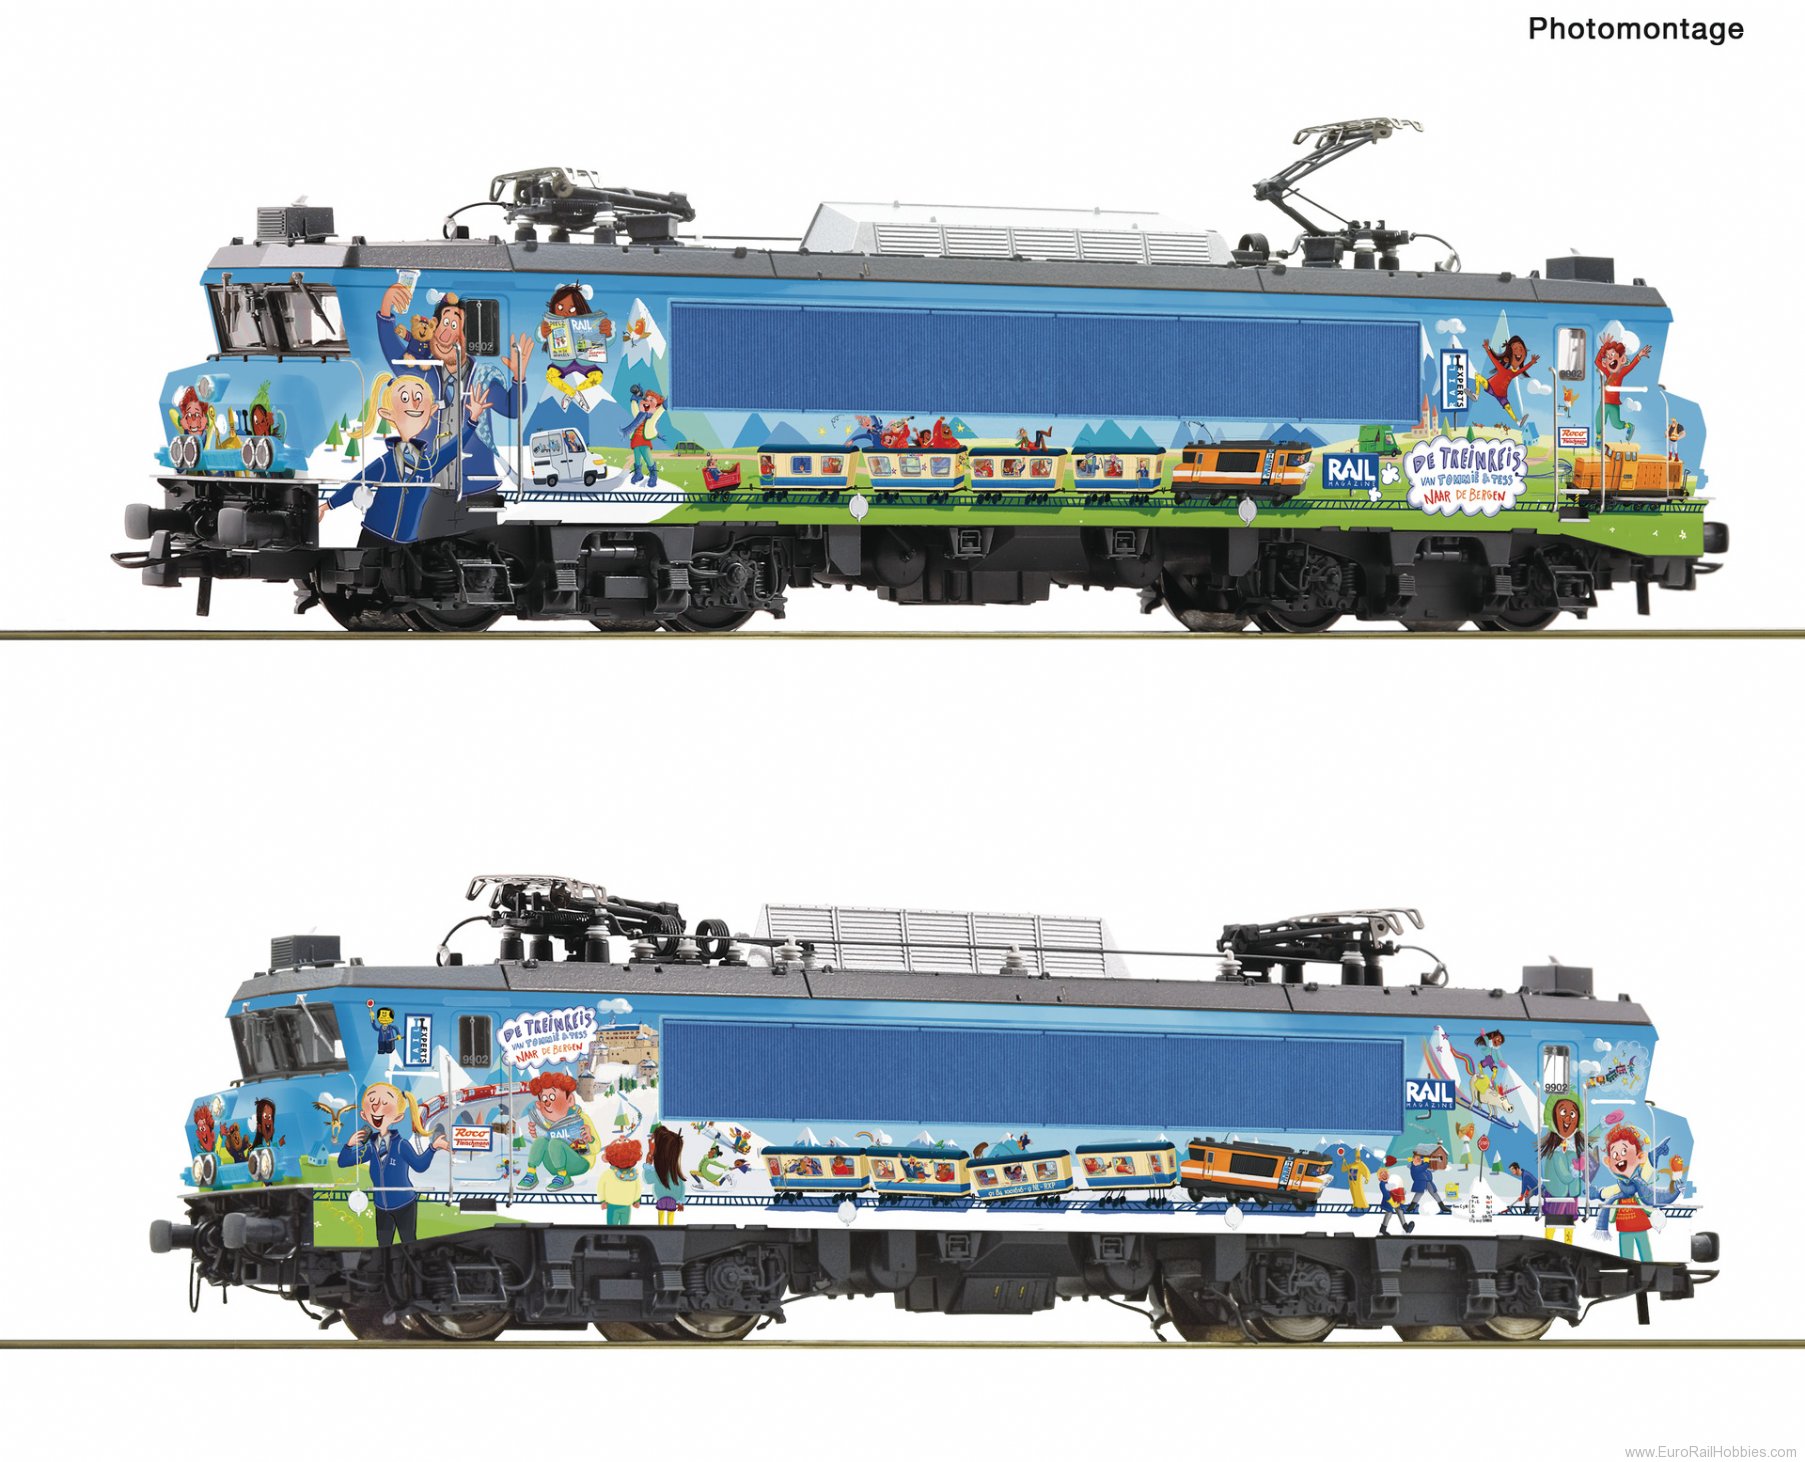 Roco 7510089 Electric locomotive 9902, Railexperts (DCC So